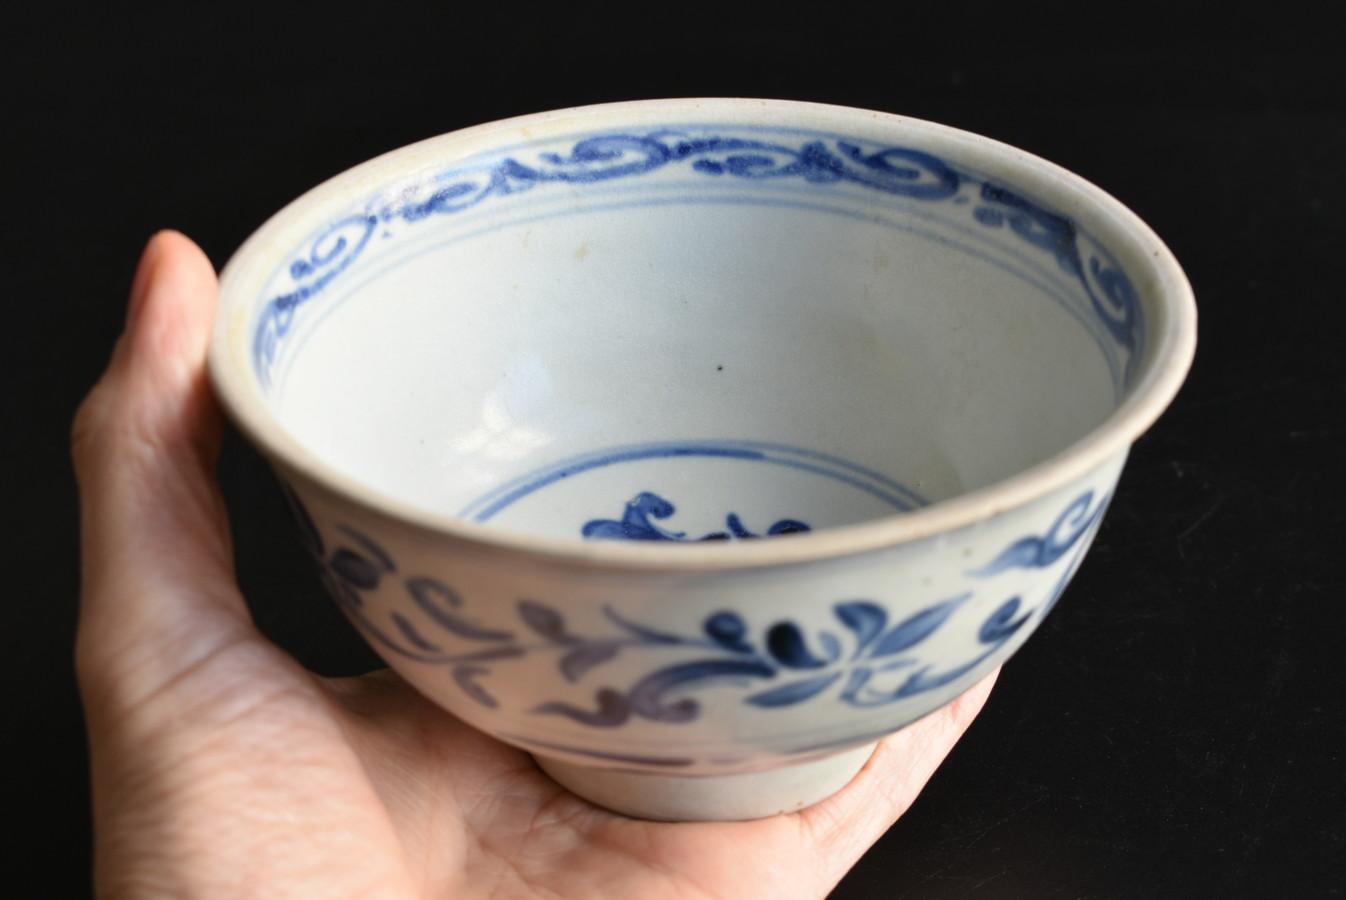 Glazed Vietnamese Antique Bowl 16th Century / 